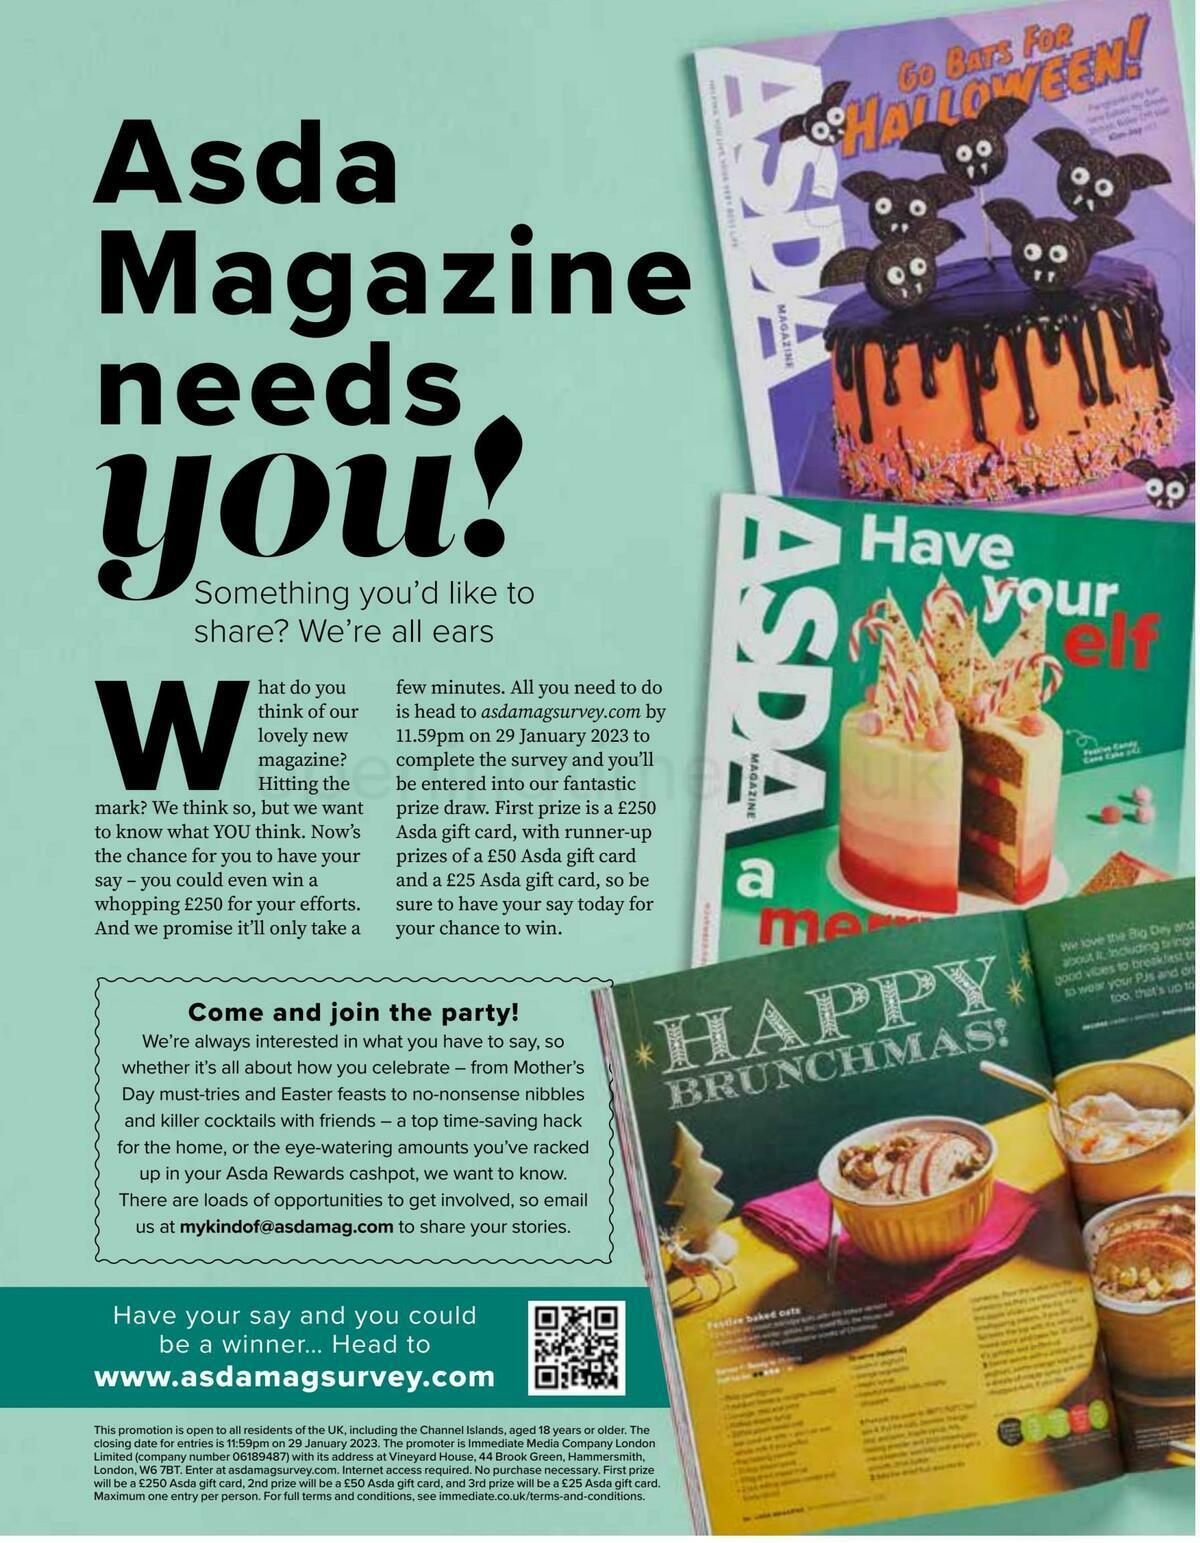 ASDA Magazine January Offers from 1 January